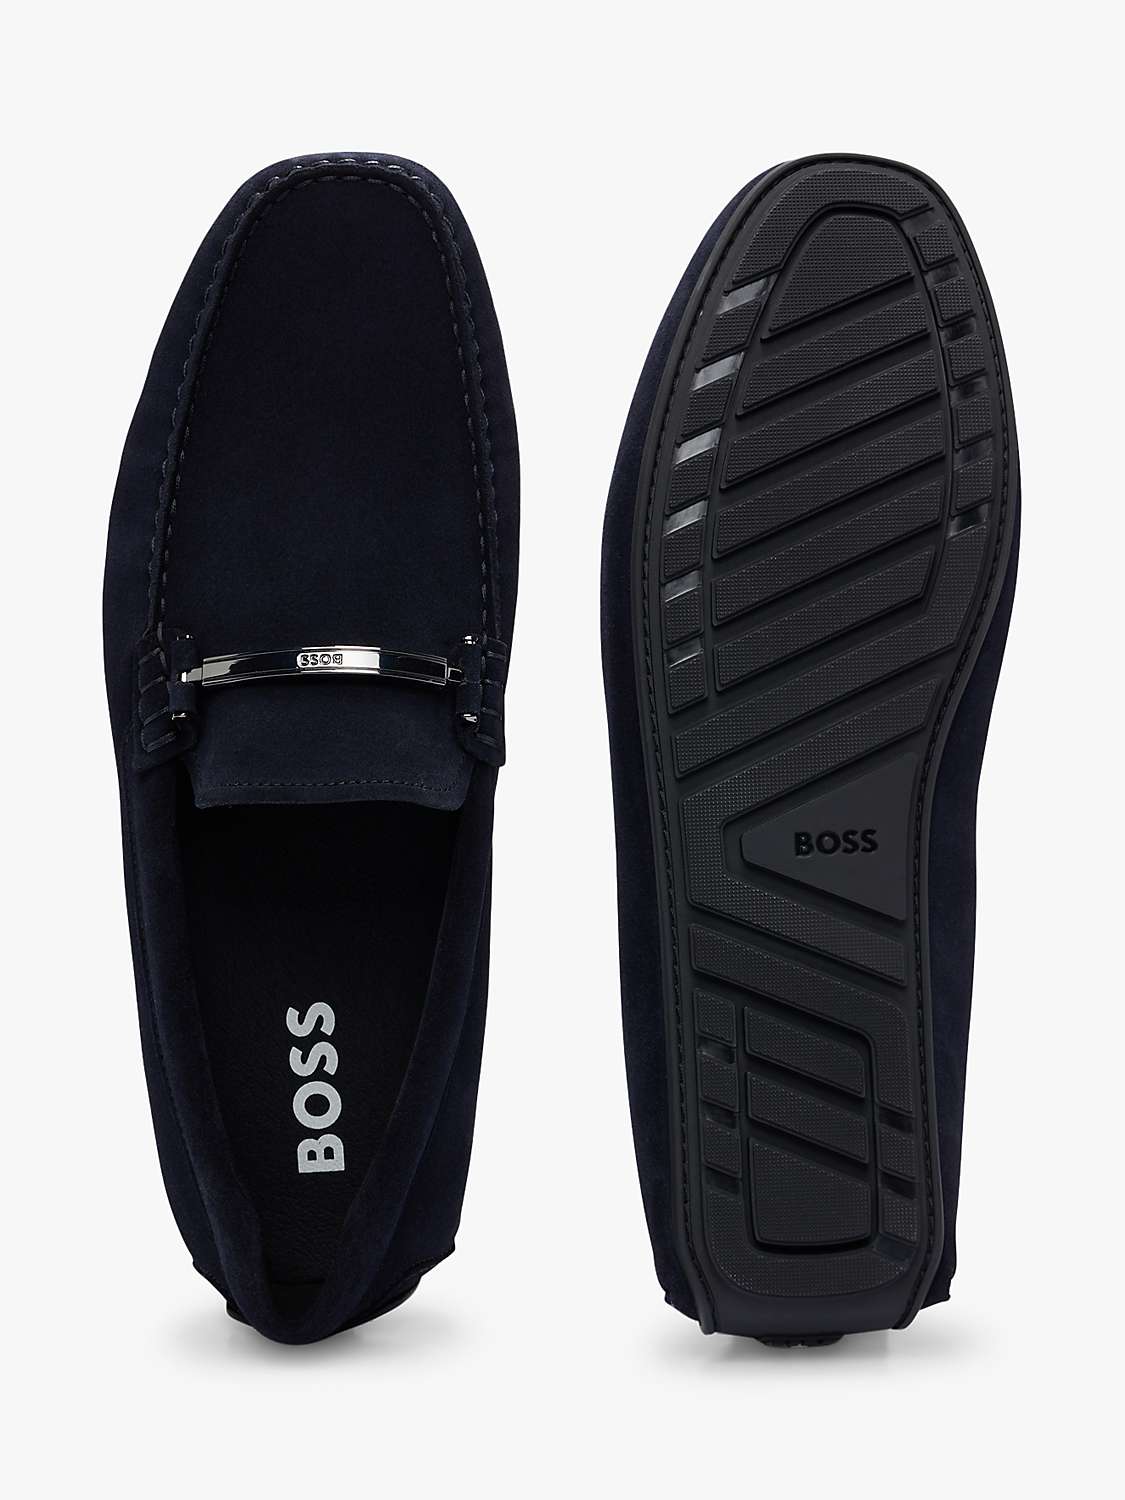 Buy BOSS Noel Leather Loafers, Dark Blue Online at johnlewis.com